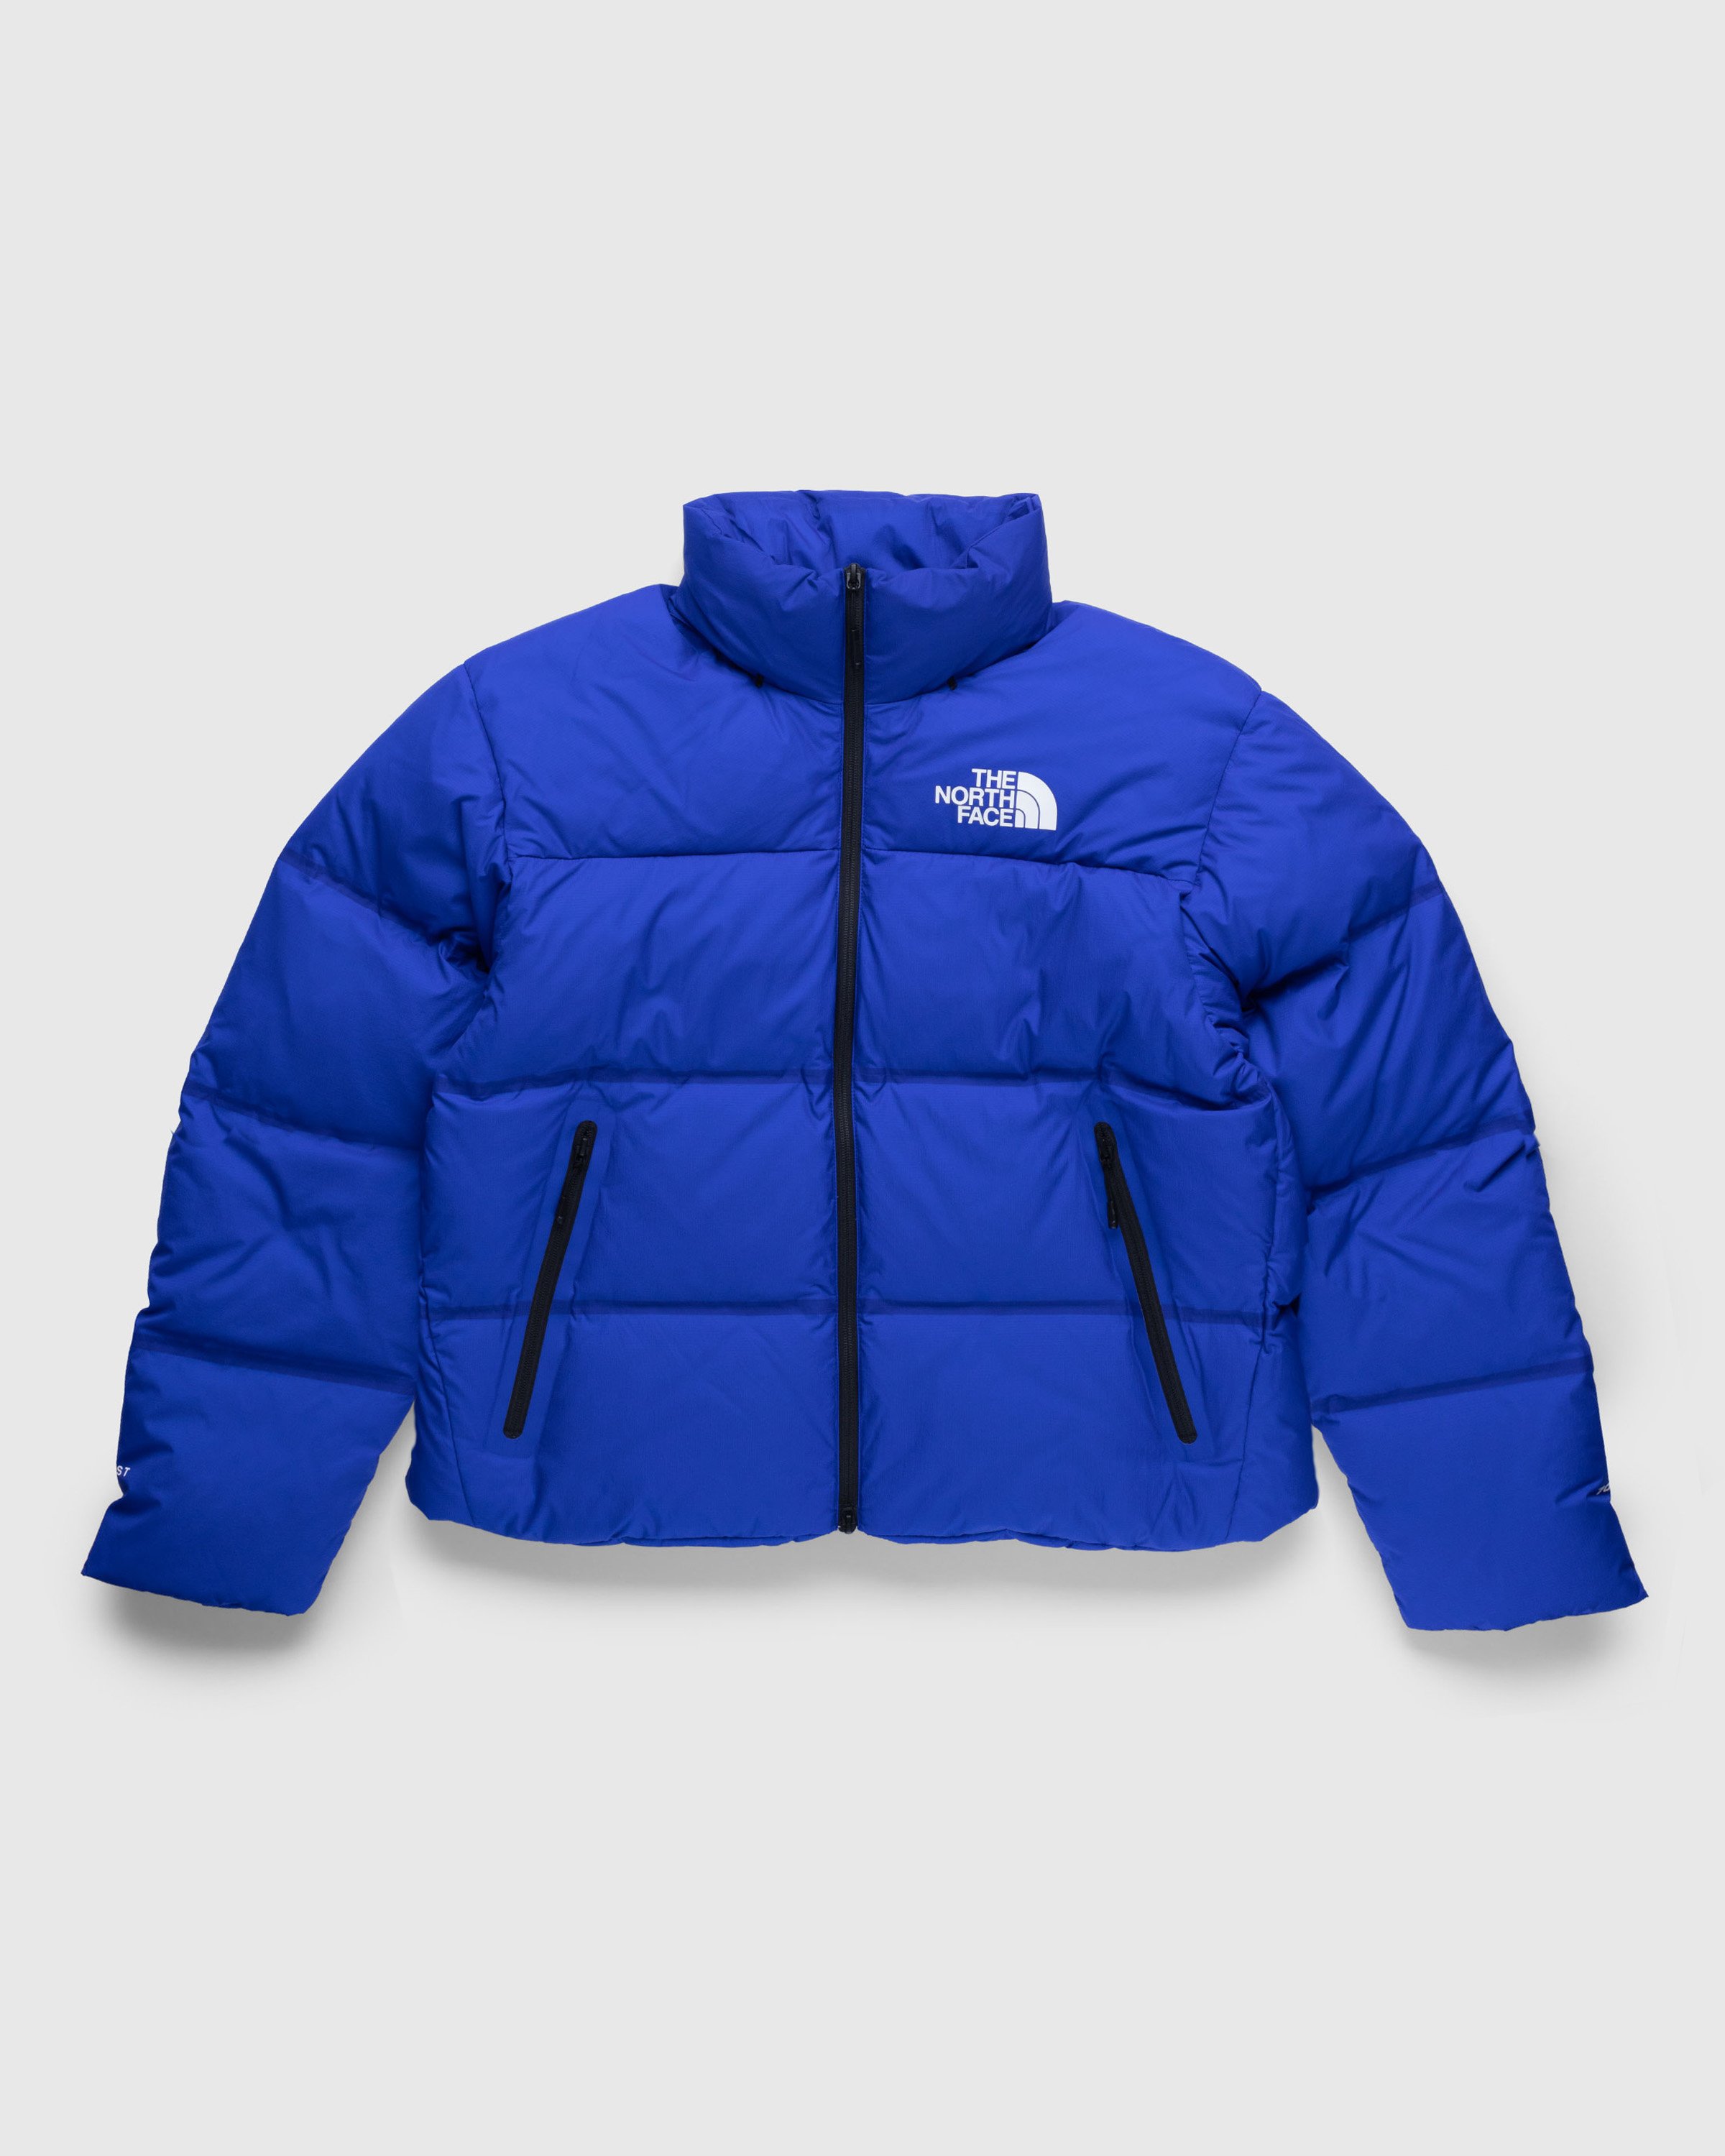 The North Face - Rmst Nuptse Jacket Lapis Blue - Clothing - Blue - Image 1